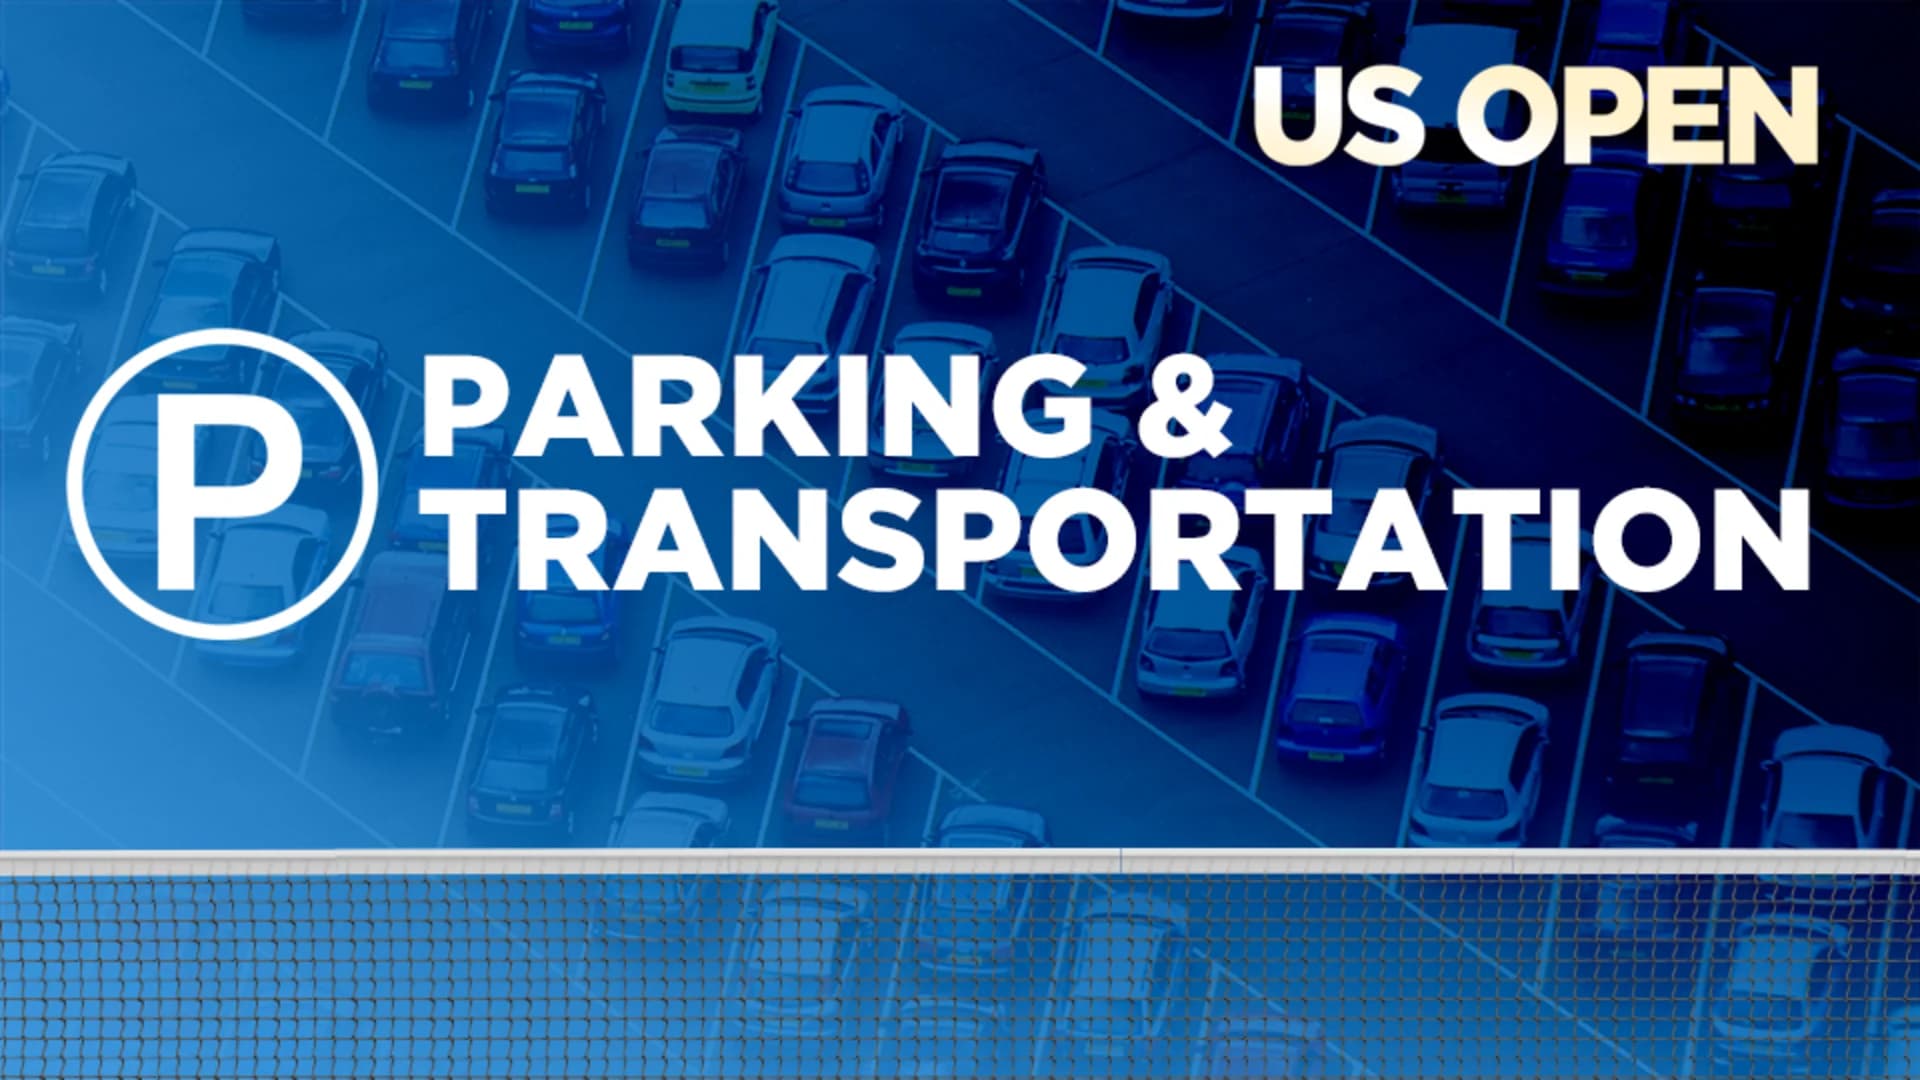 US Open Tennis Parking & Transportation